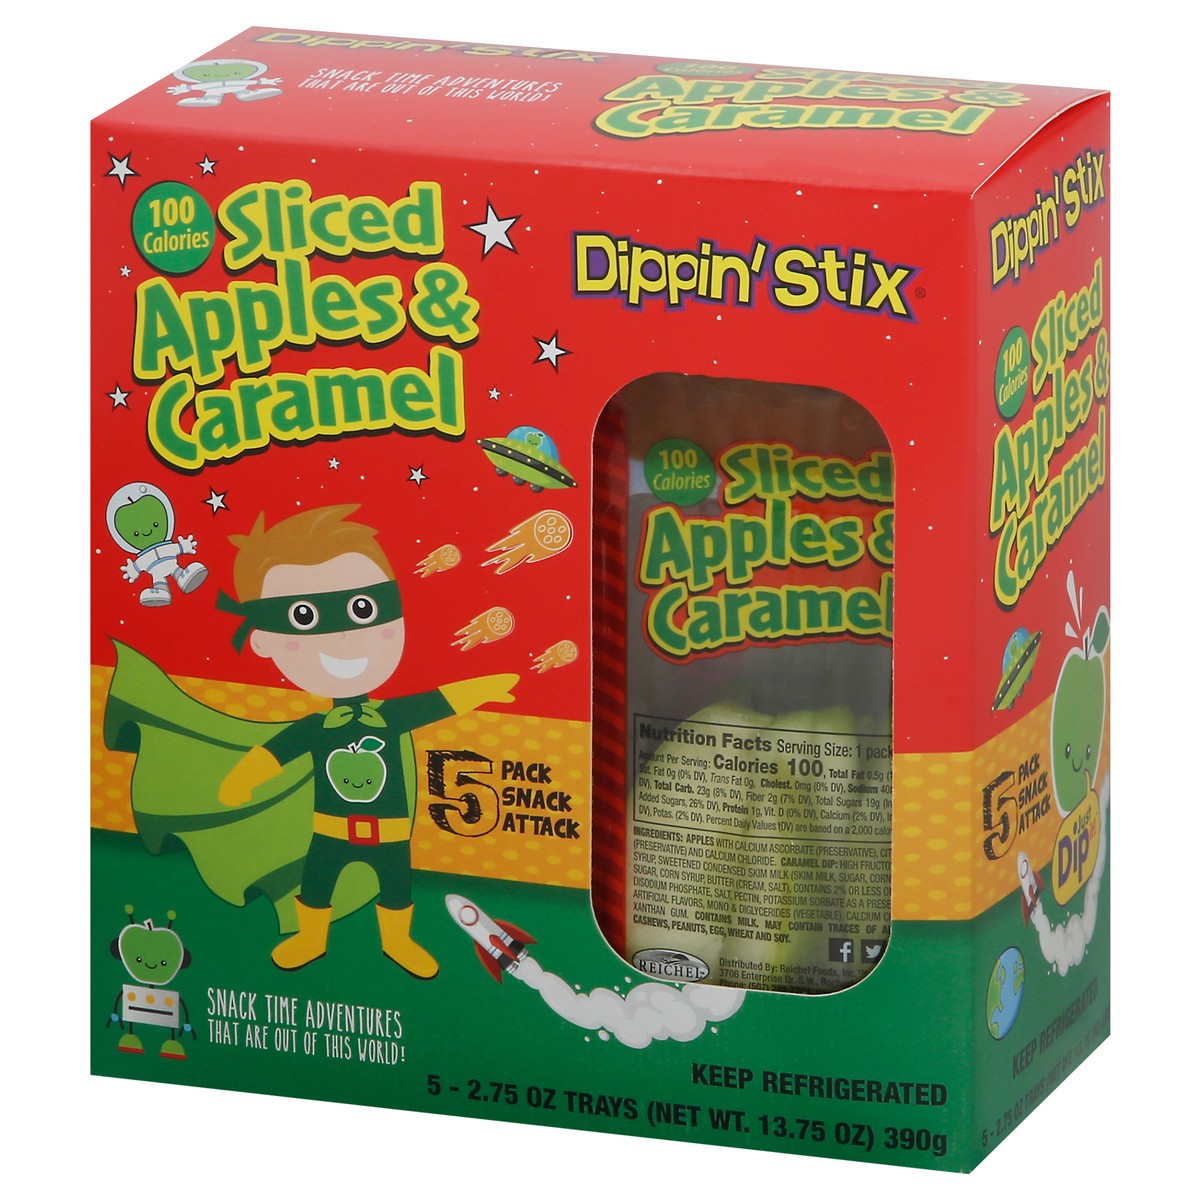 slide 3 of 9, Dippin'Stix Sliced Apples & Caramel 5 - 2.75 oz Trays, 2.75 oz